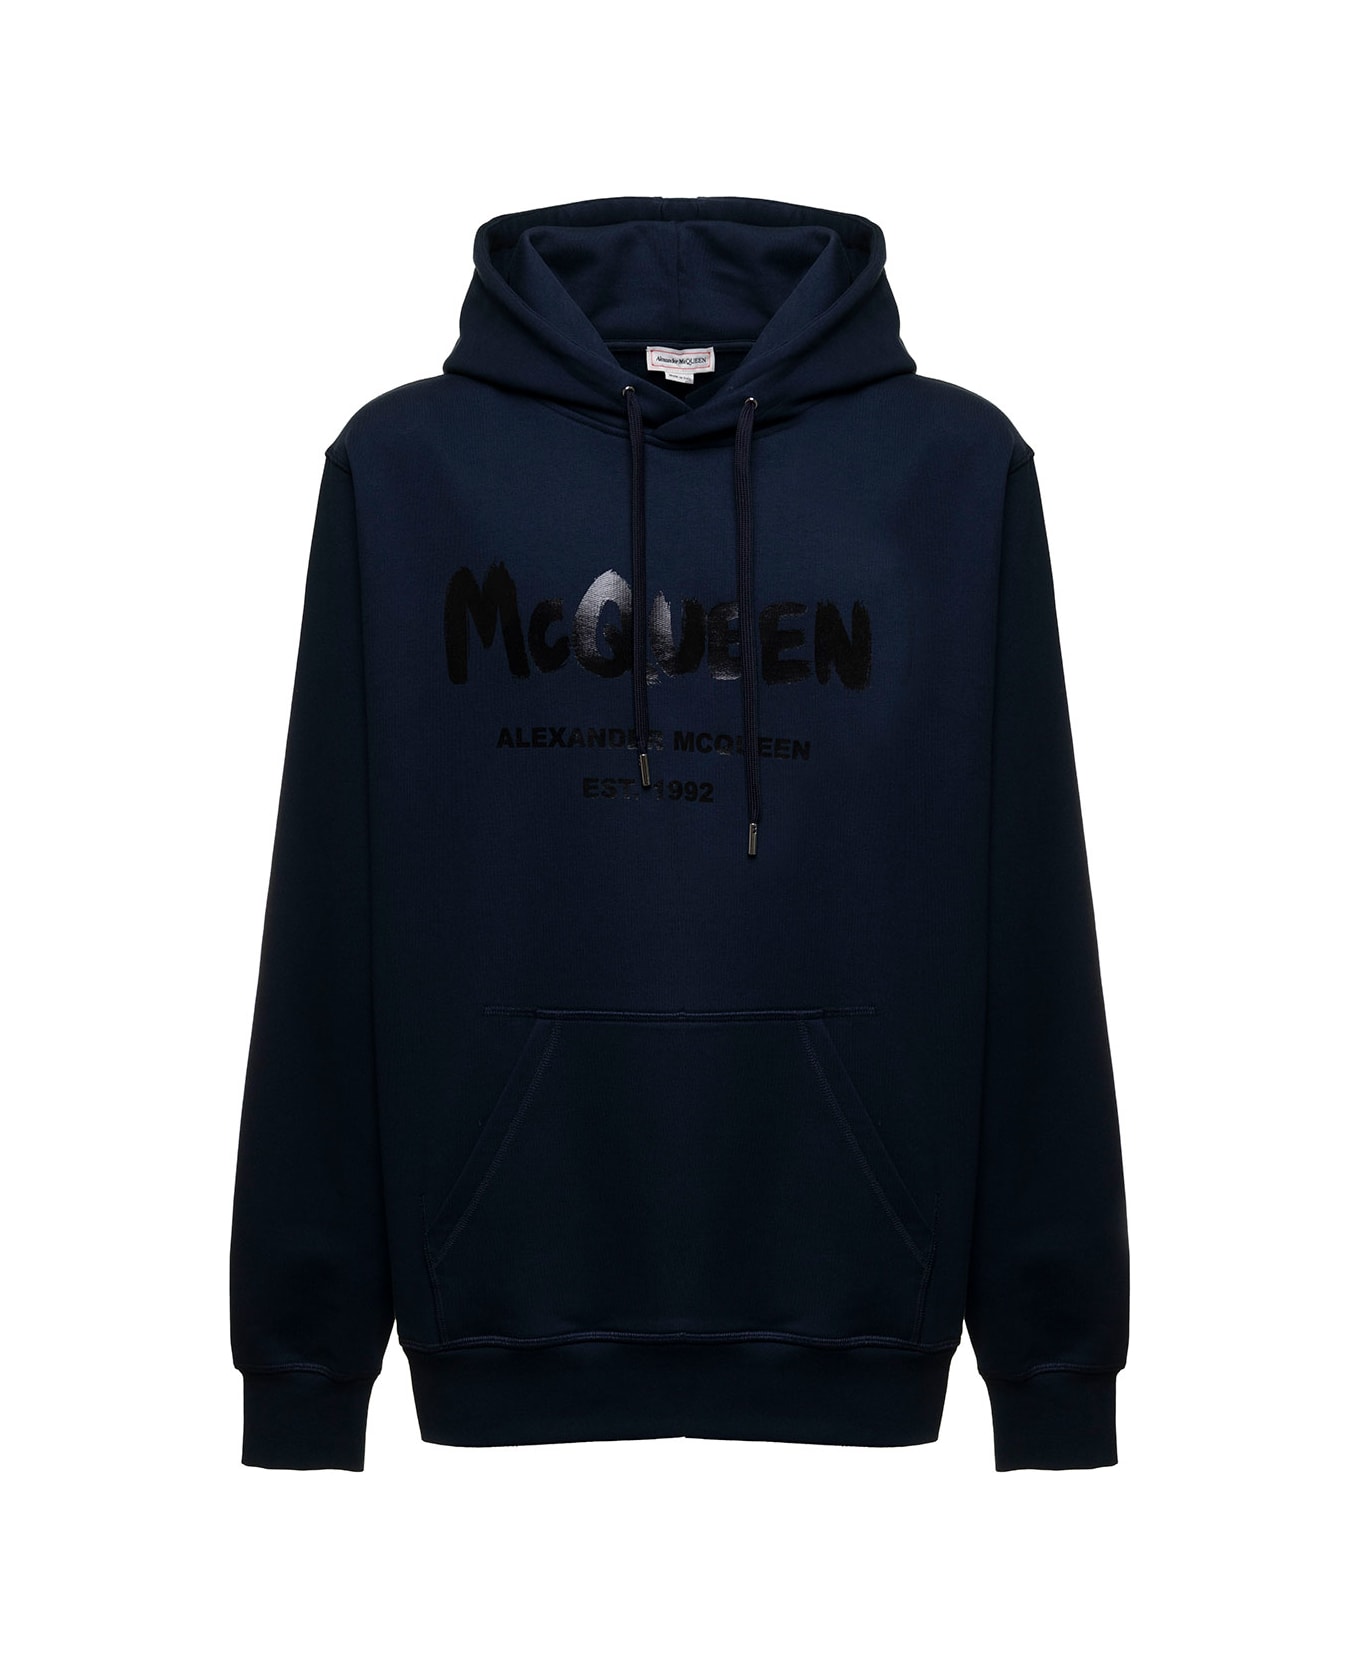 Alexander McQueen Man's Blue Cotton Hoodie With Logo Print - Blu